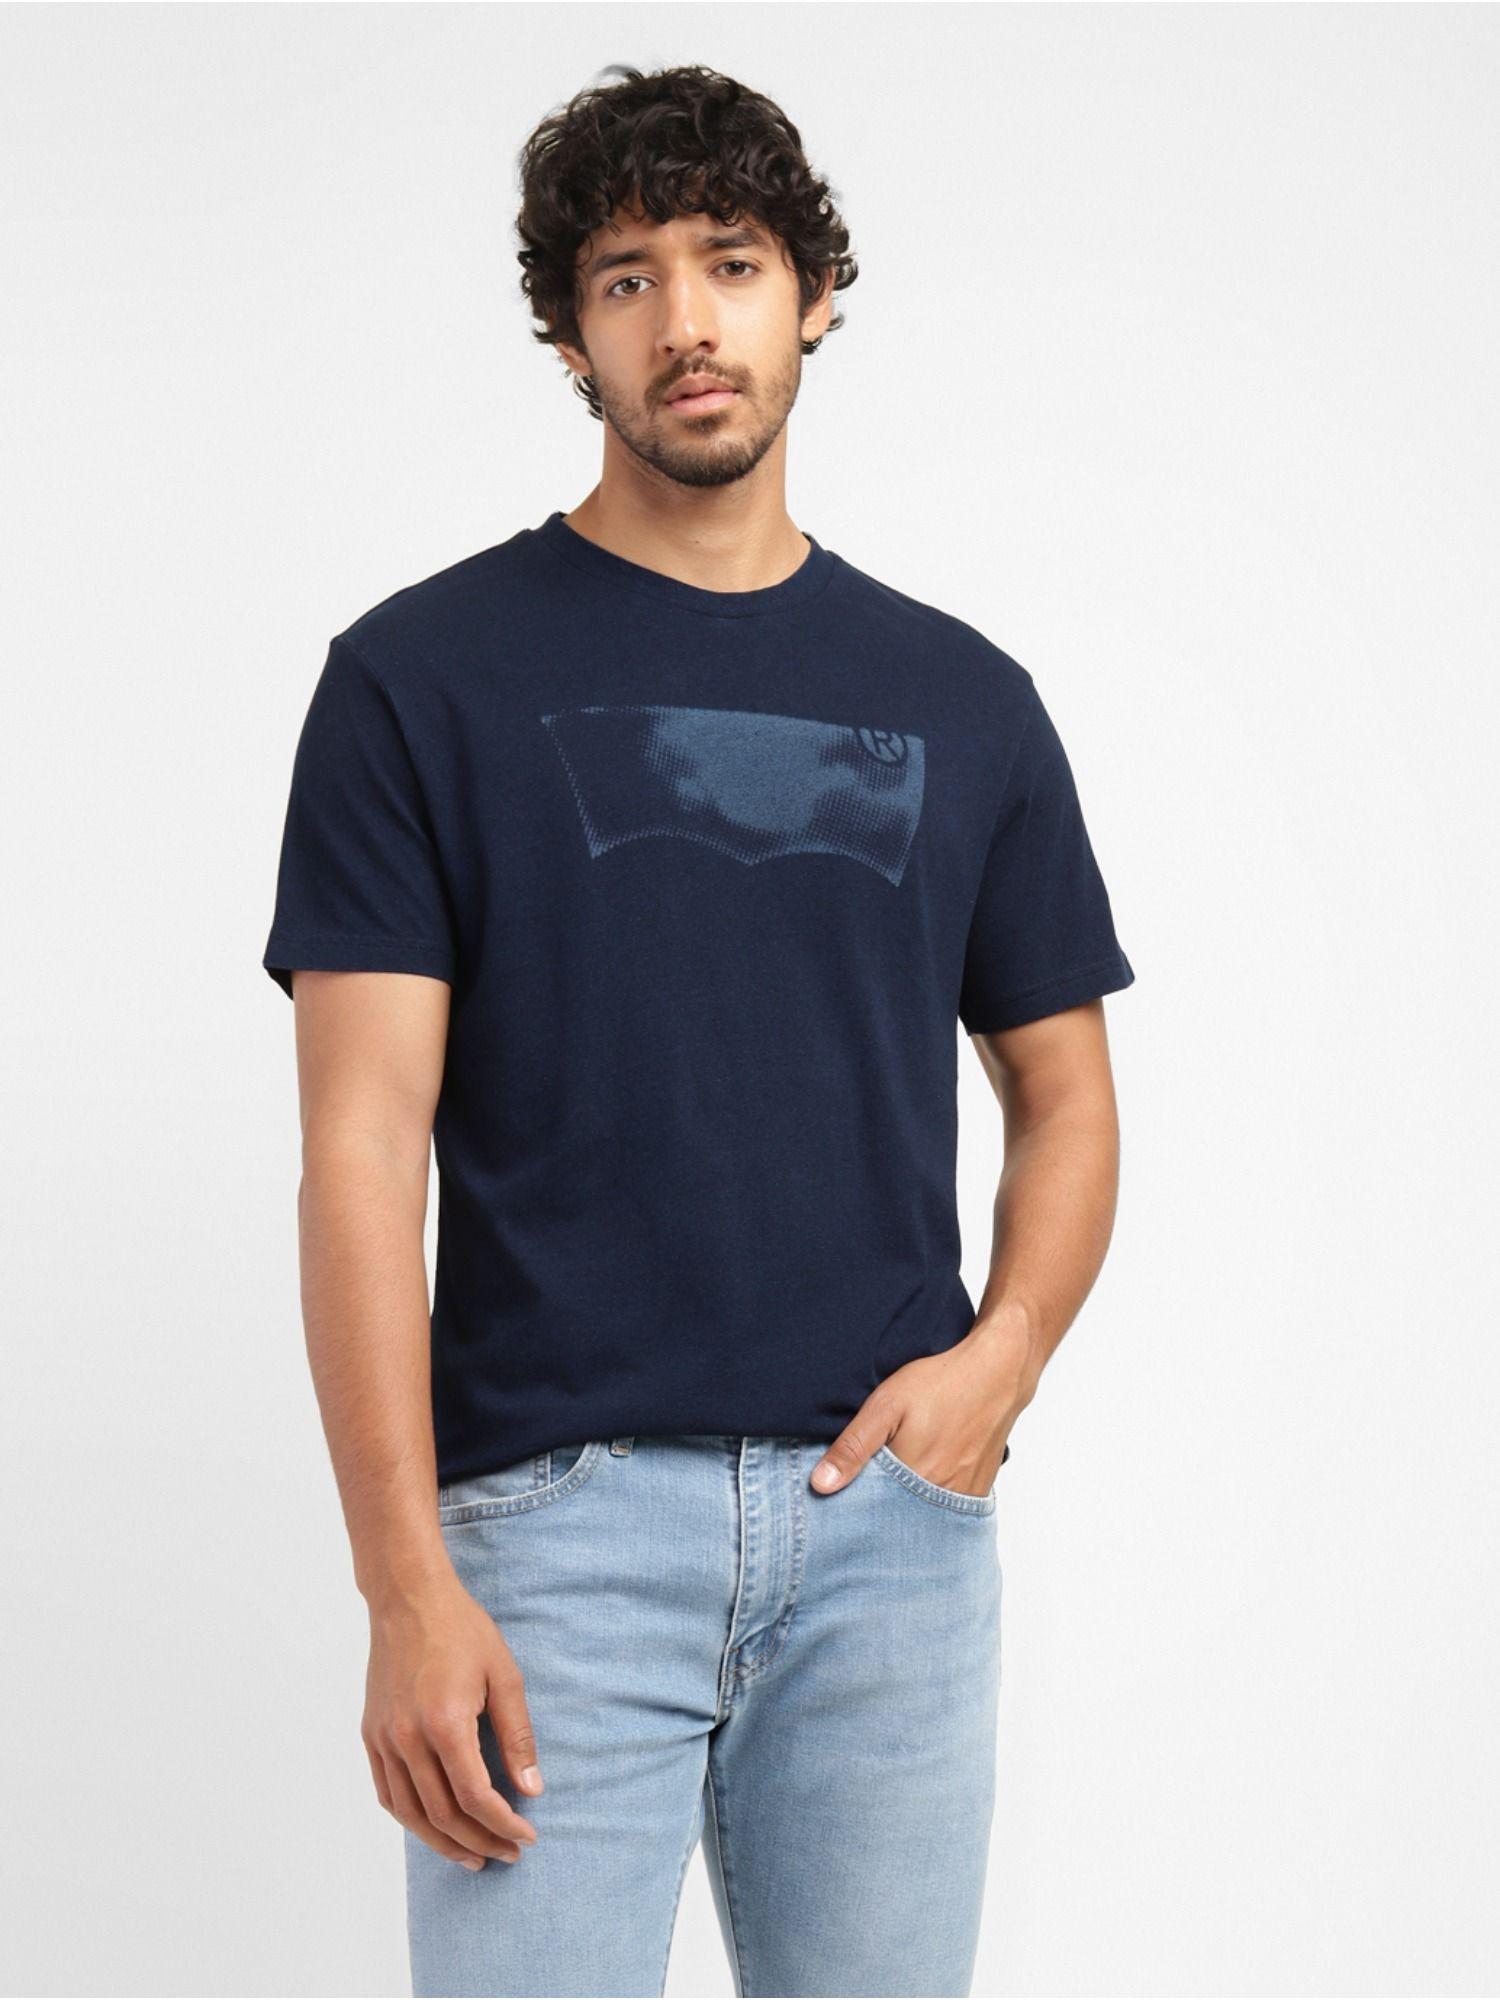 men's navy blue graphic printed crew neck t-shirt